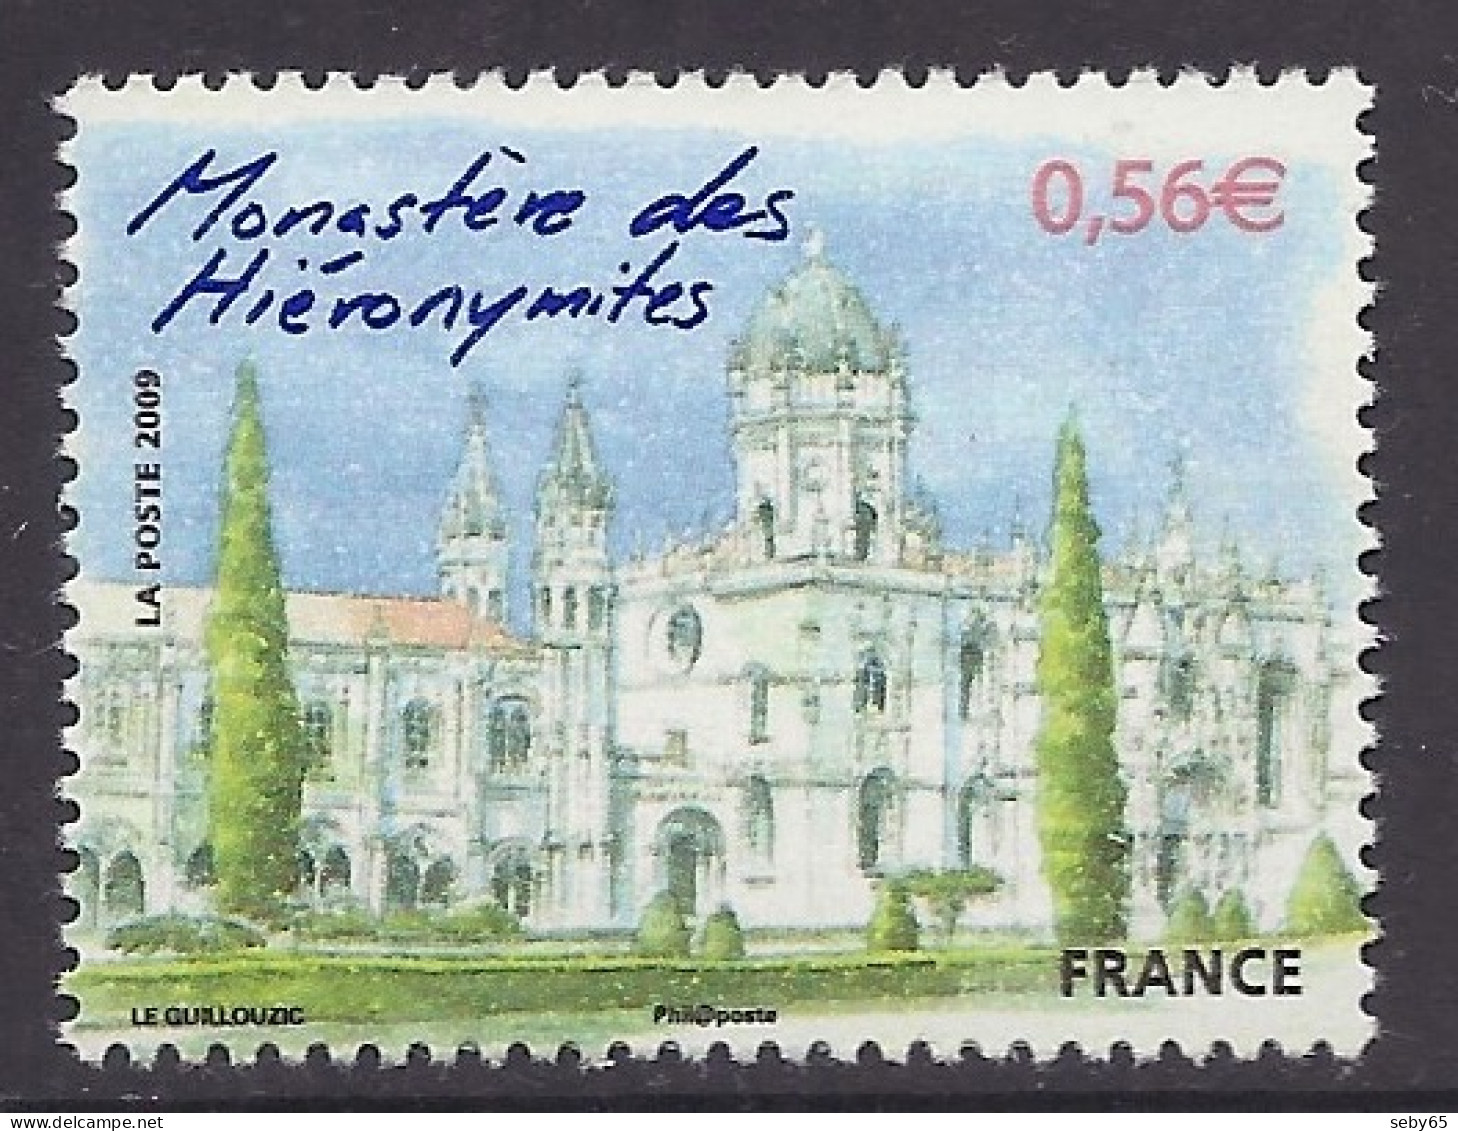 France 2009 - Capitales Européennes, Lisbonne, Lisboa, Lisbona, European Capitals, Monastery Of Hieronymites - MNH - Ungebraucht